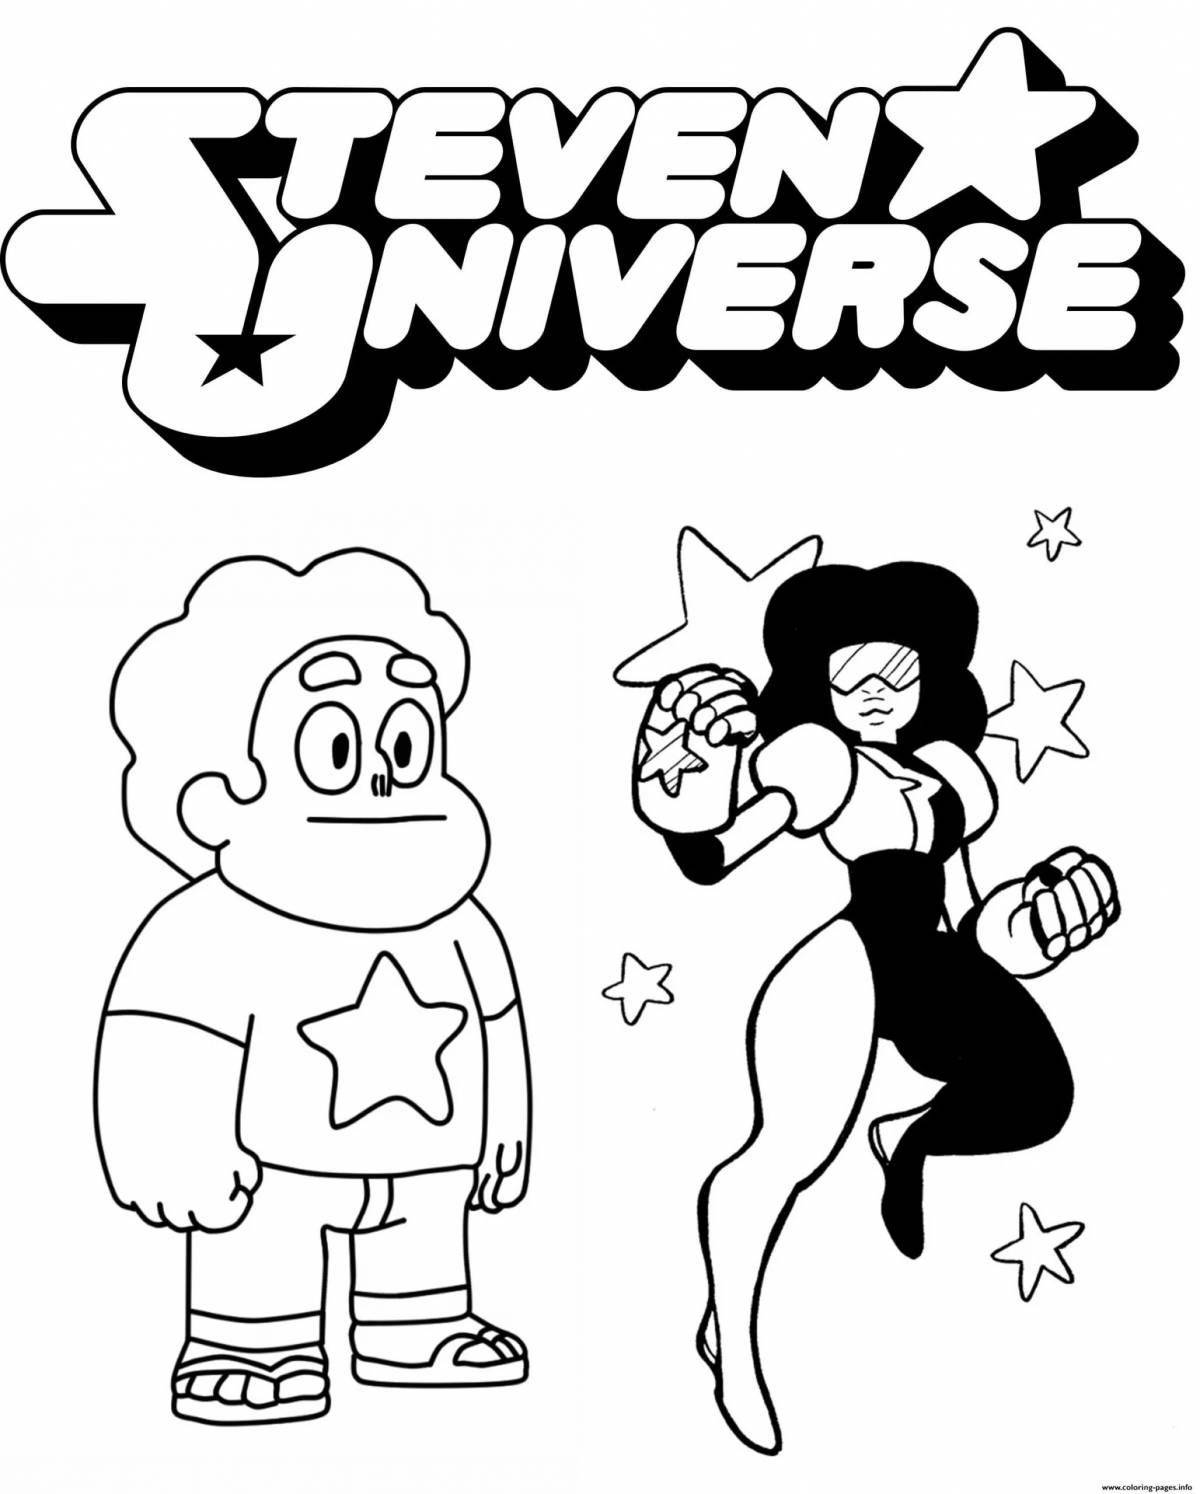 Great steven universe coloring book